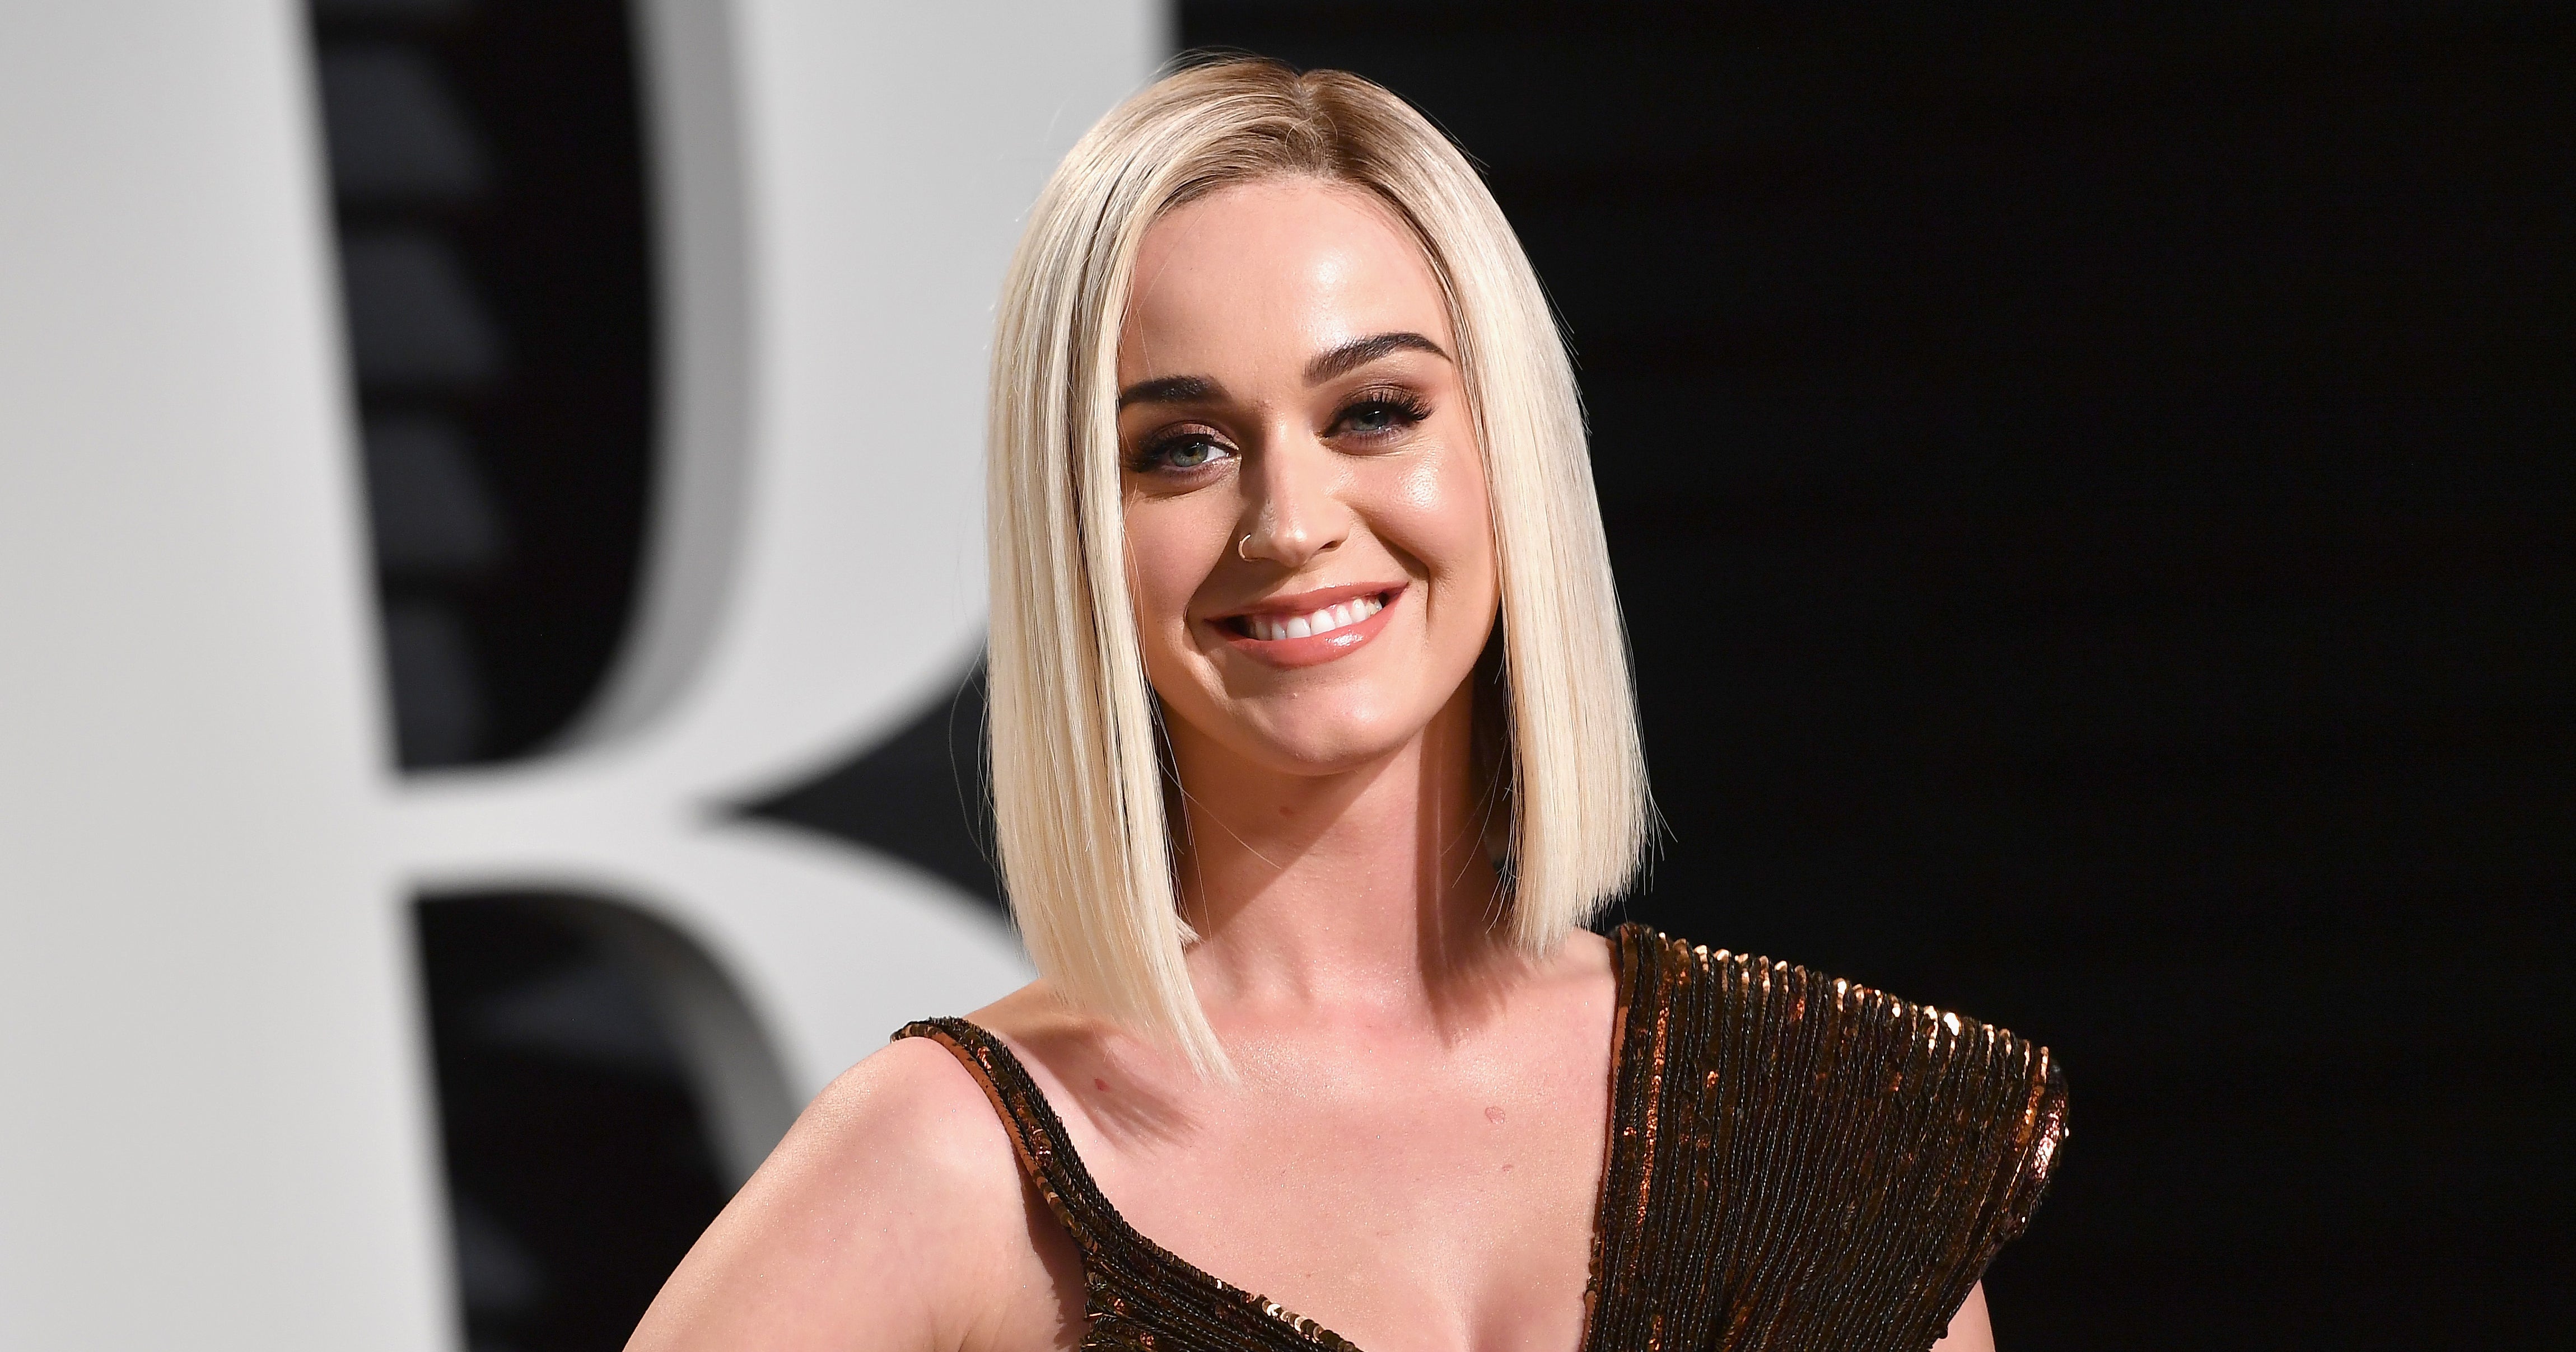 Katy Perry Got Blonde Hair Extensions In New Instagram